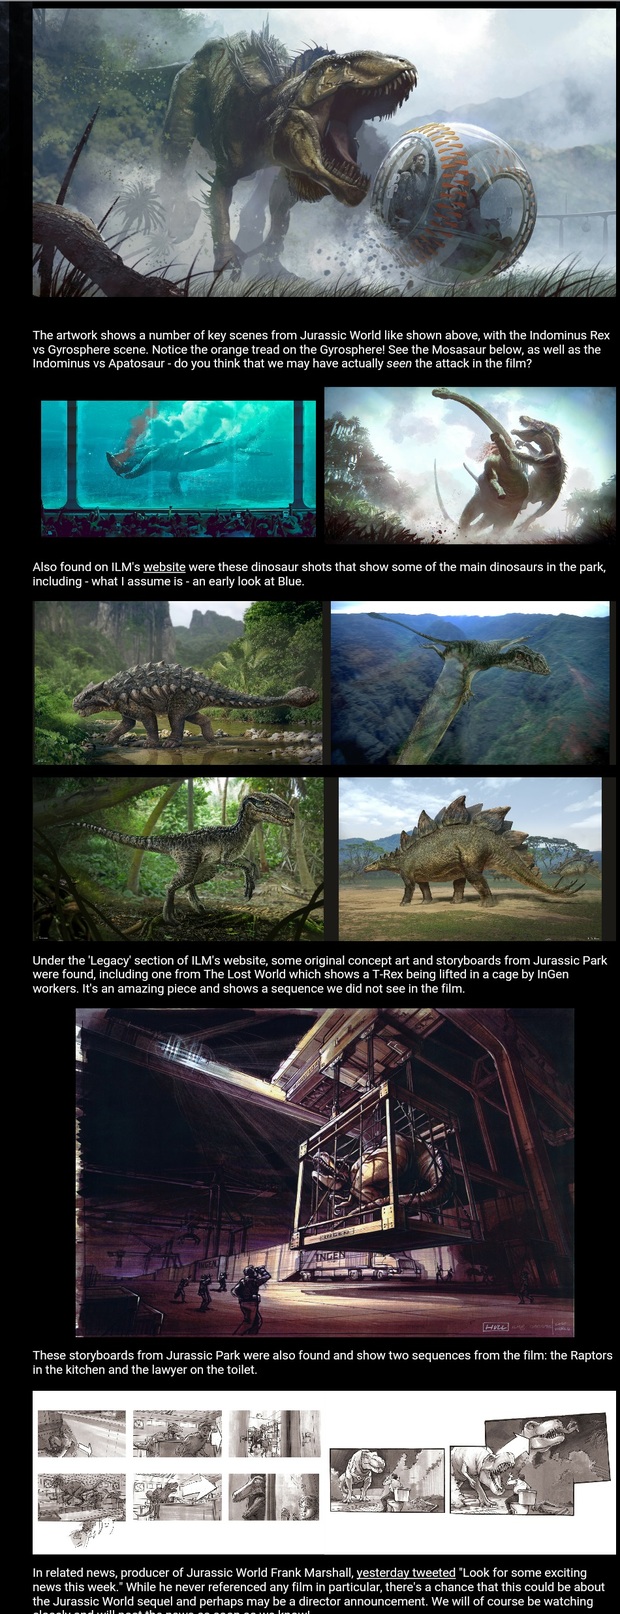 Concepts Arts de Jurassic World y Jurassic Park